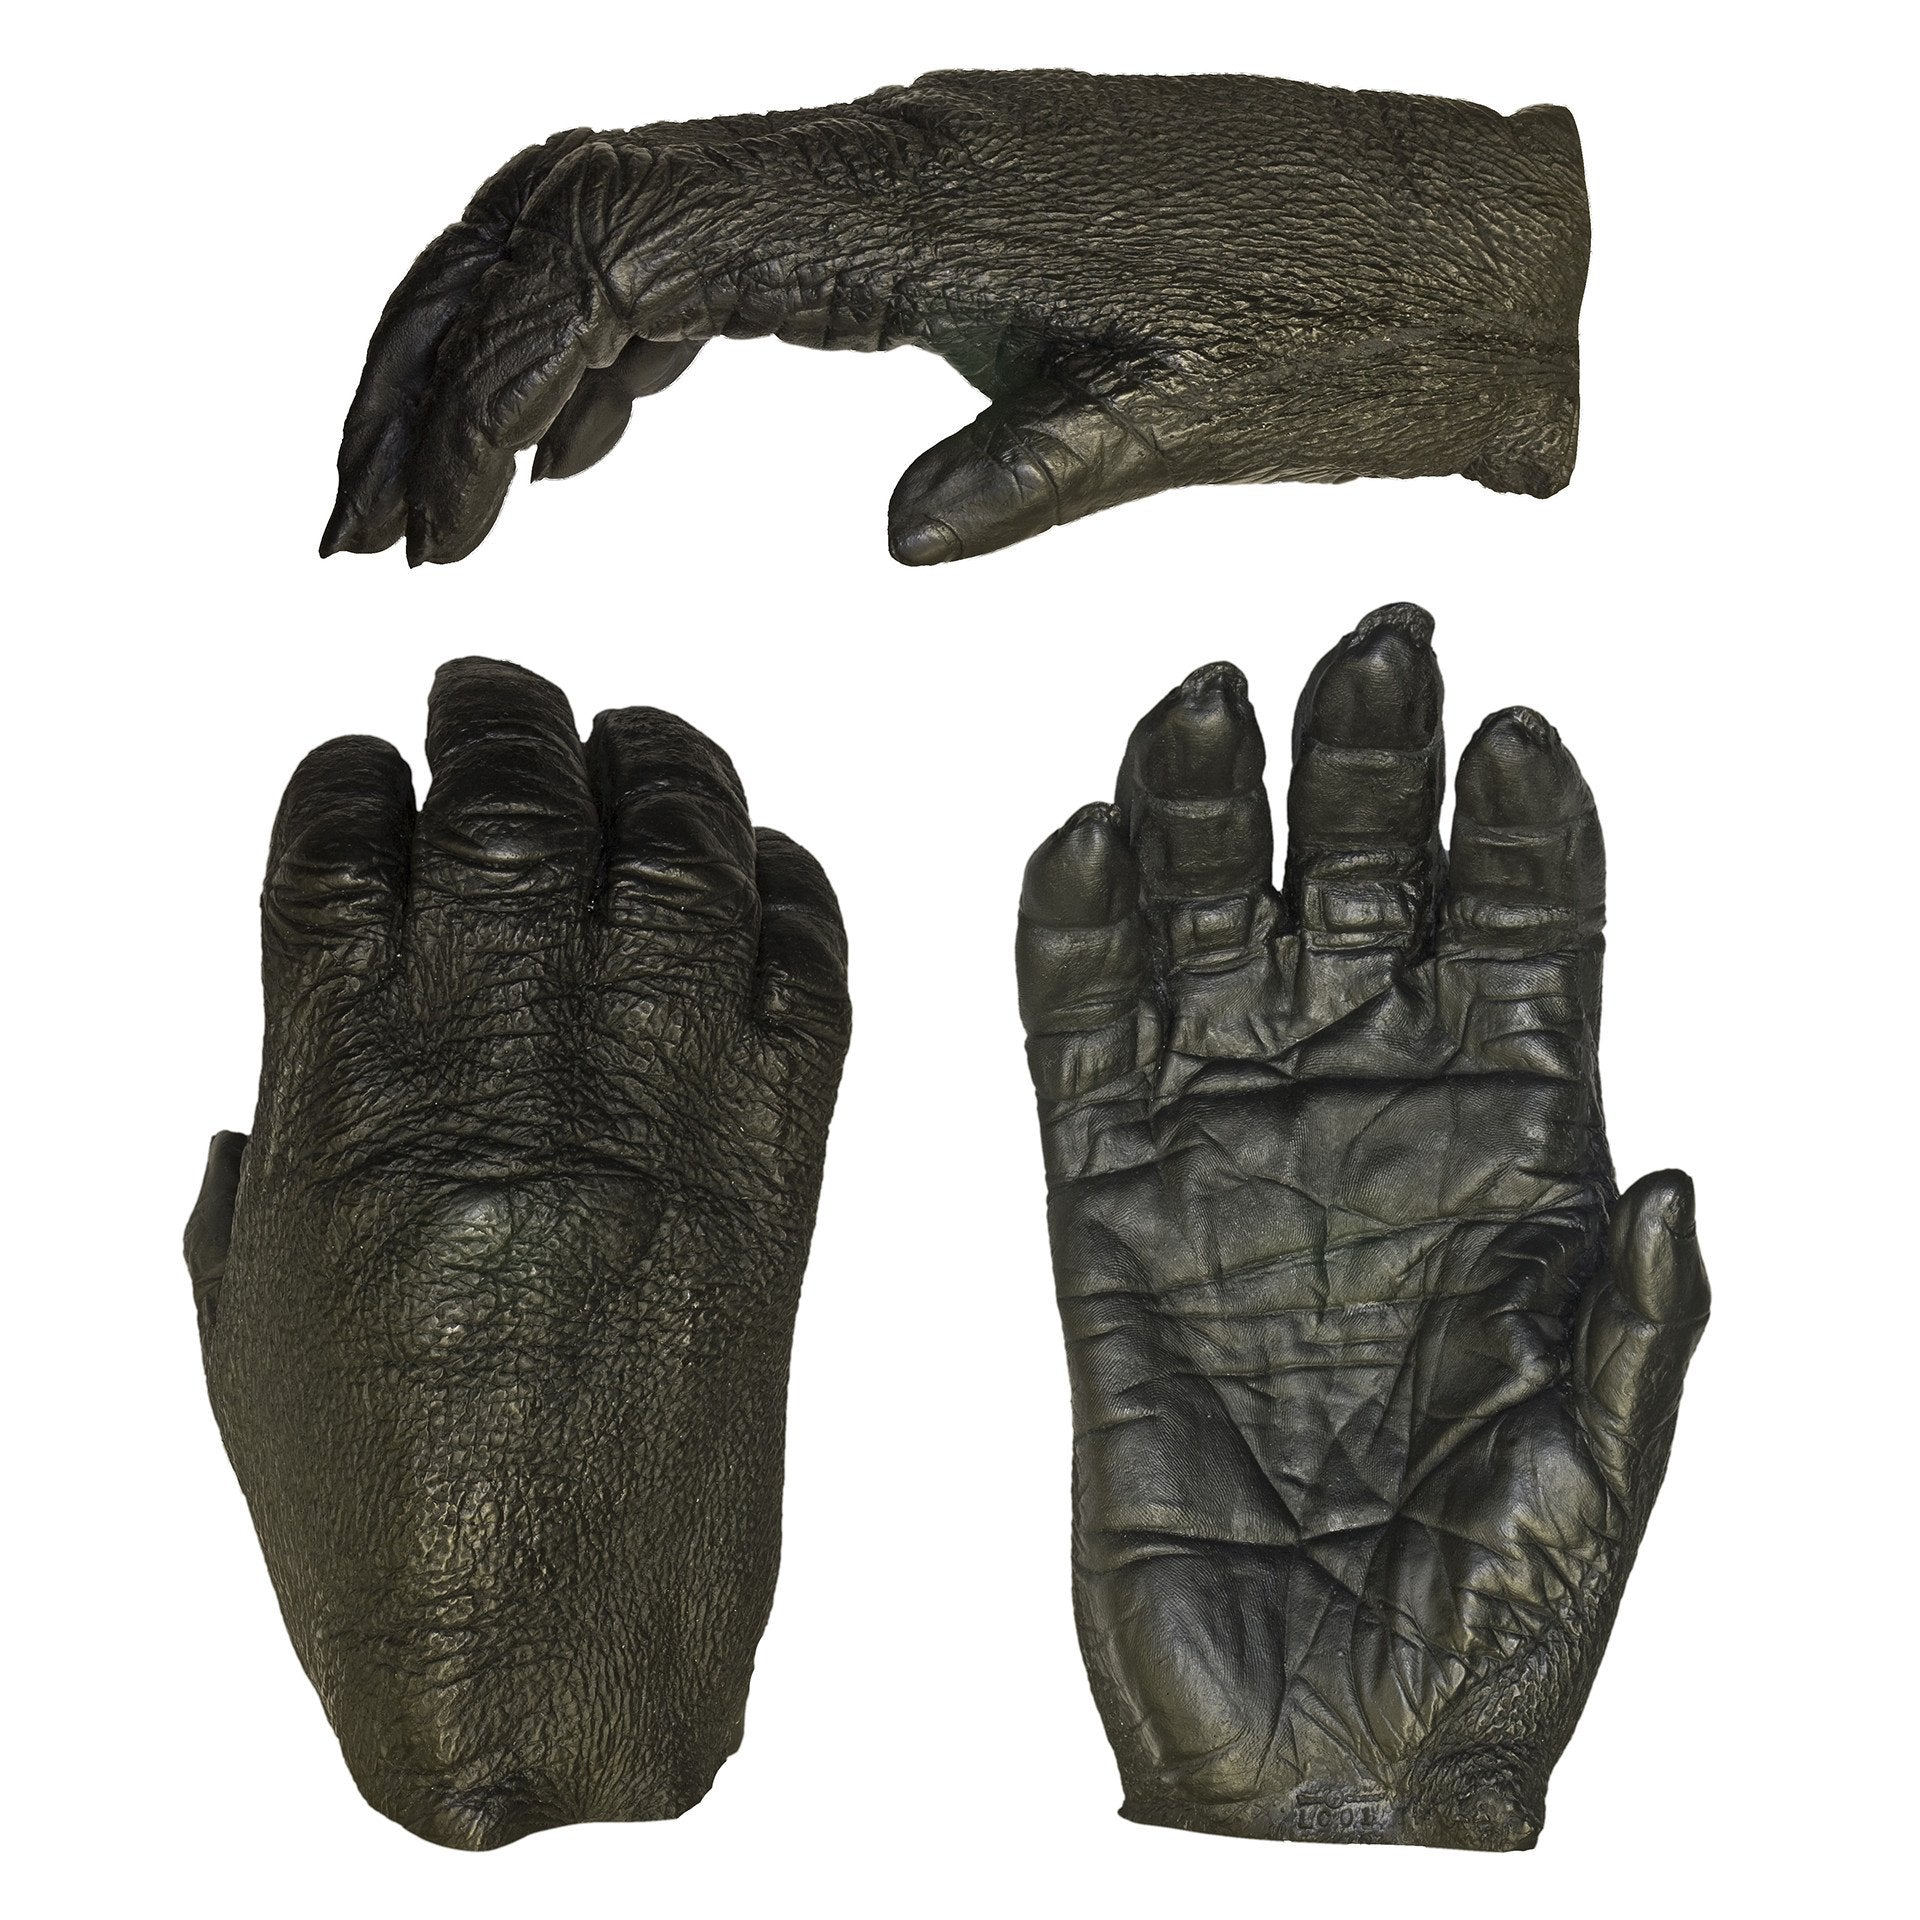 Replica Lowland Gorilla Male Right Hand — Skulls Unlimited International,  Inc.